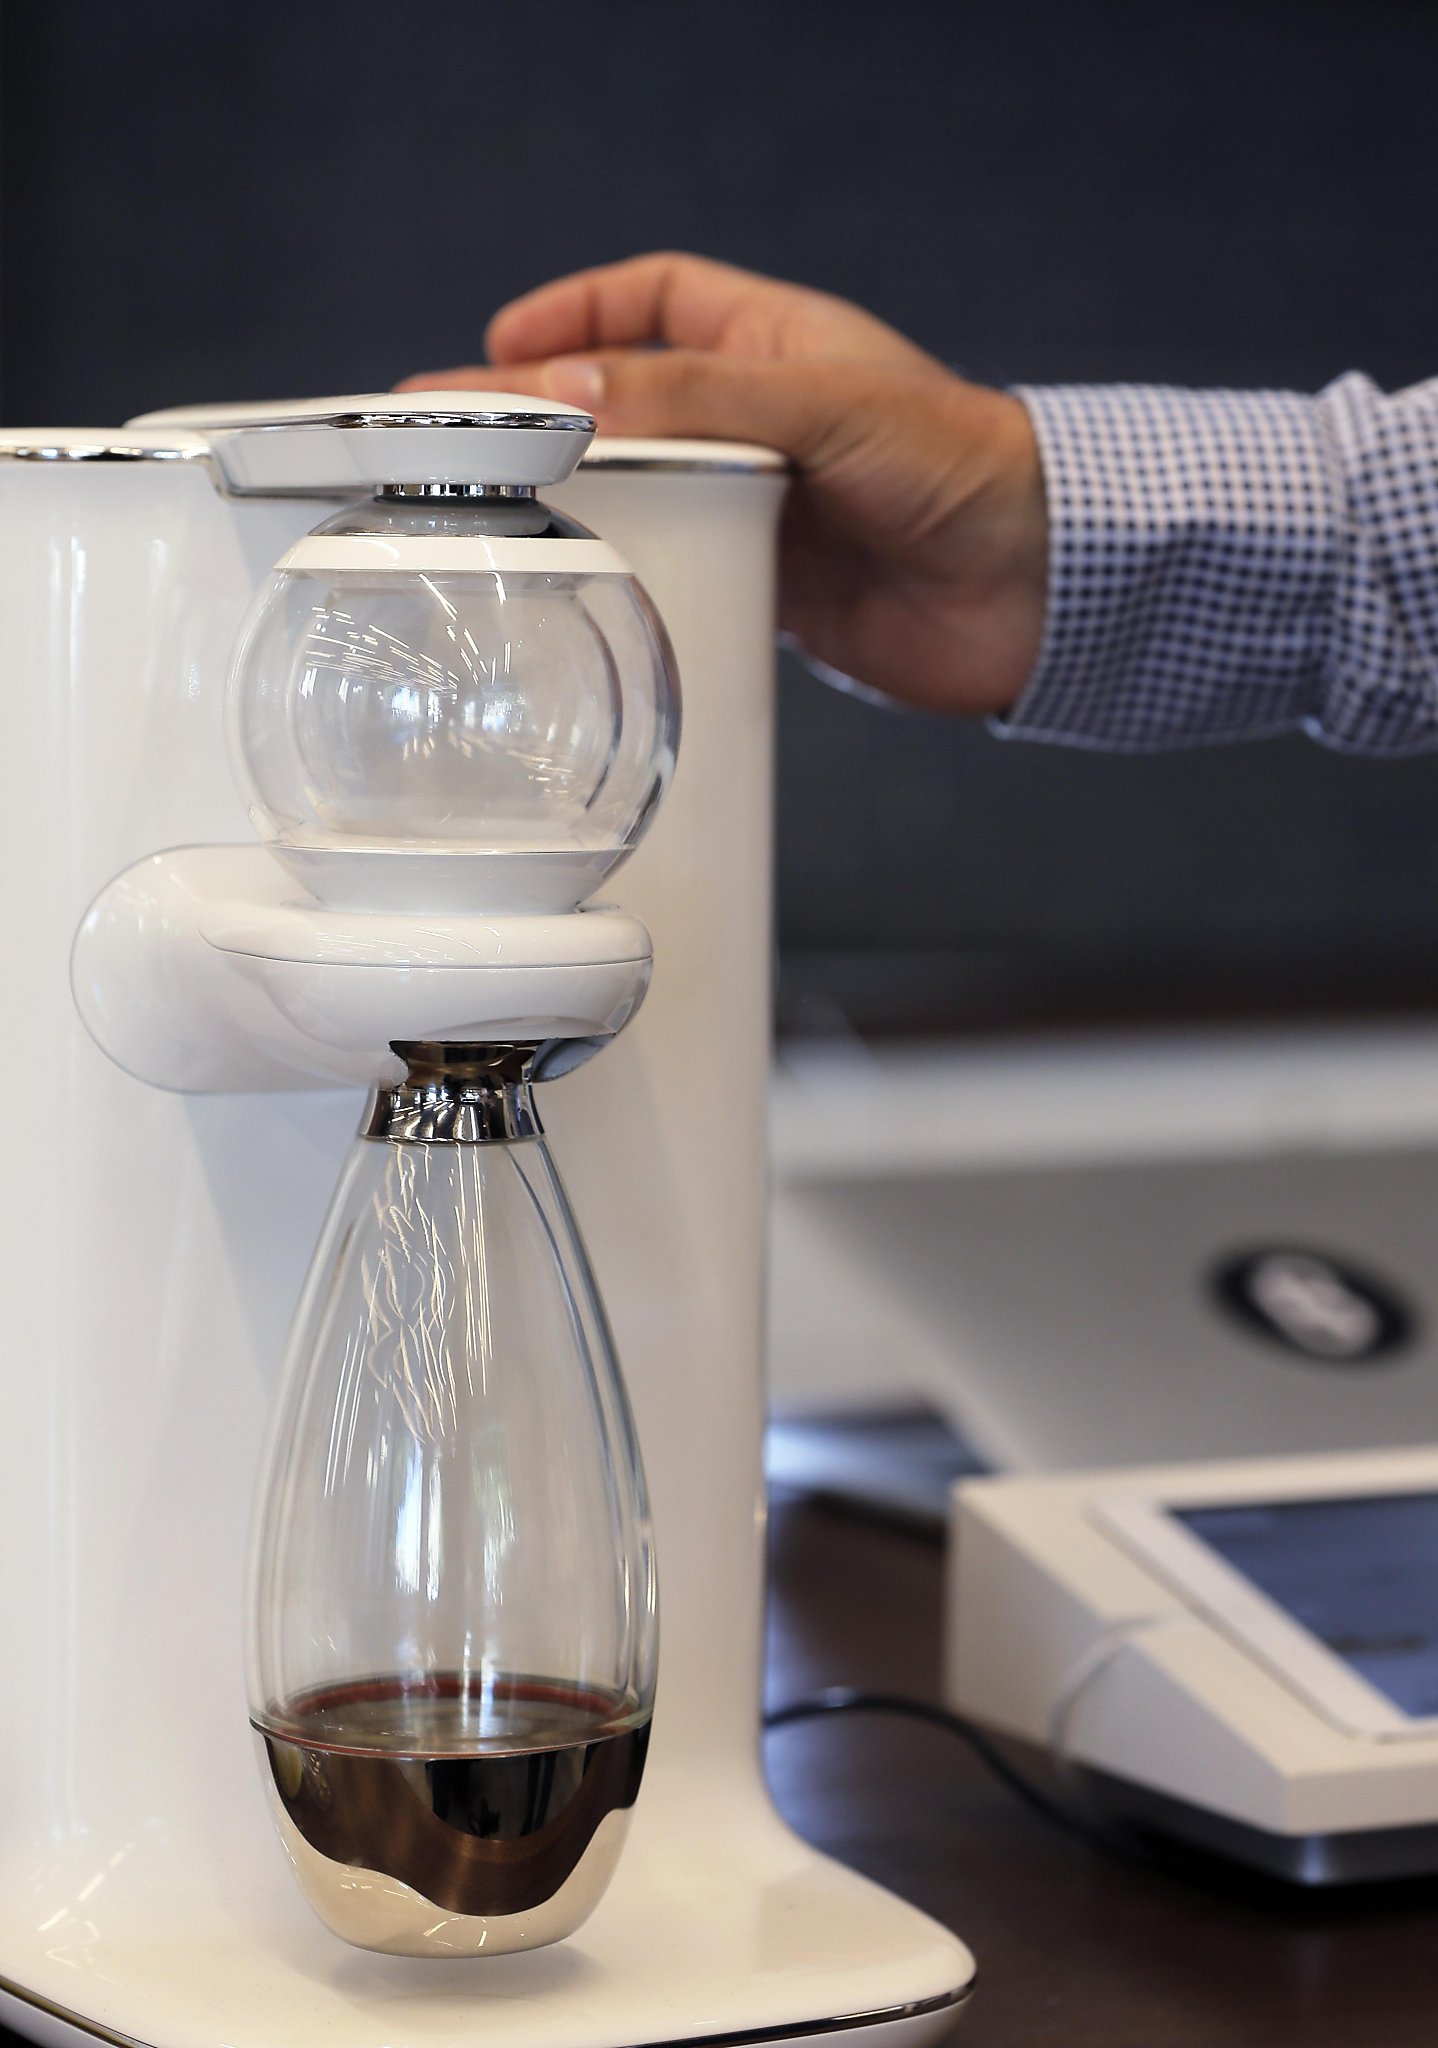 Meet Teforia, A Tea Brewing Robot For The Home